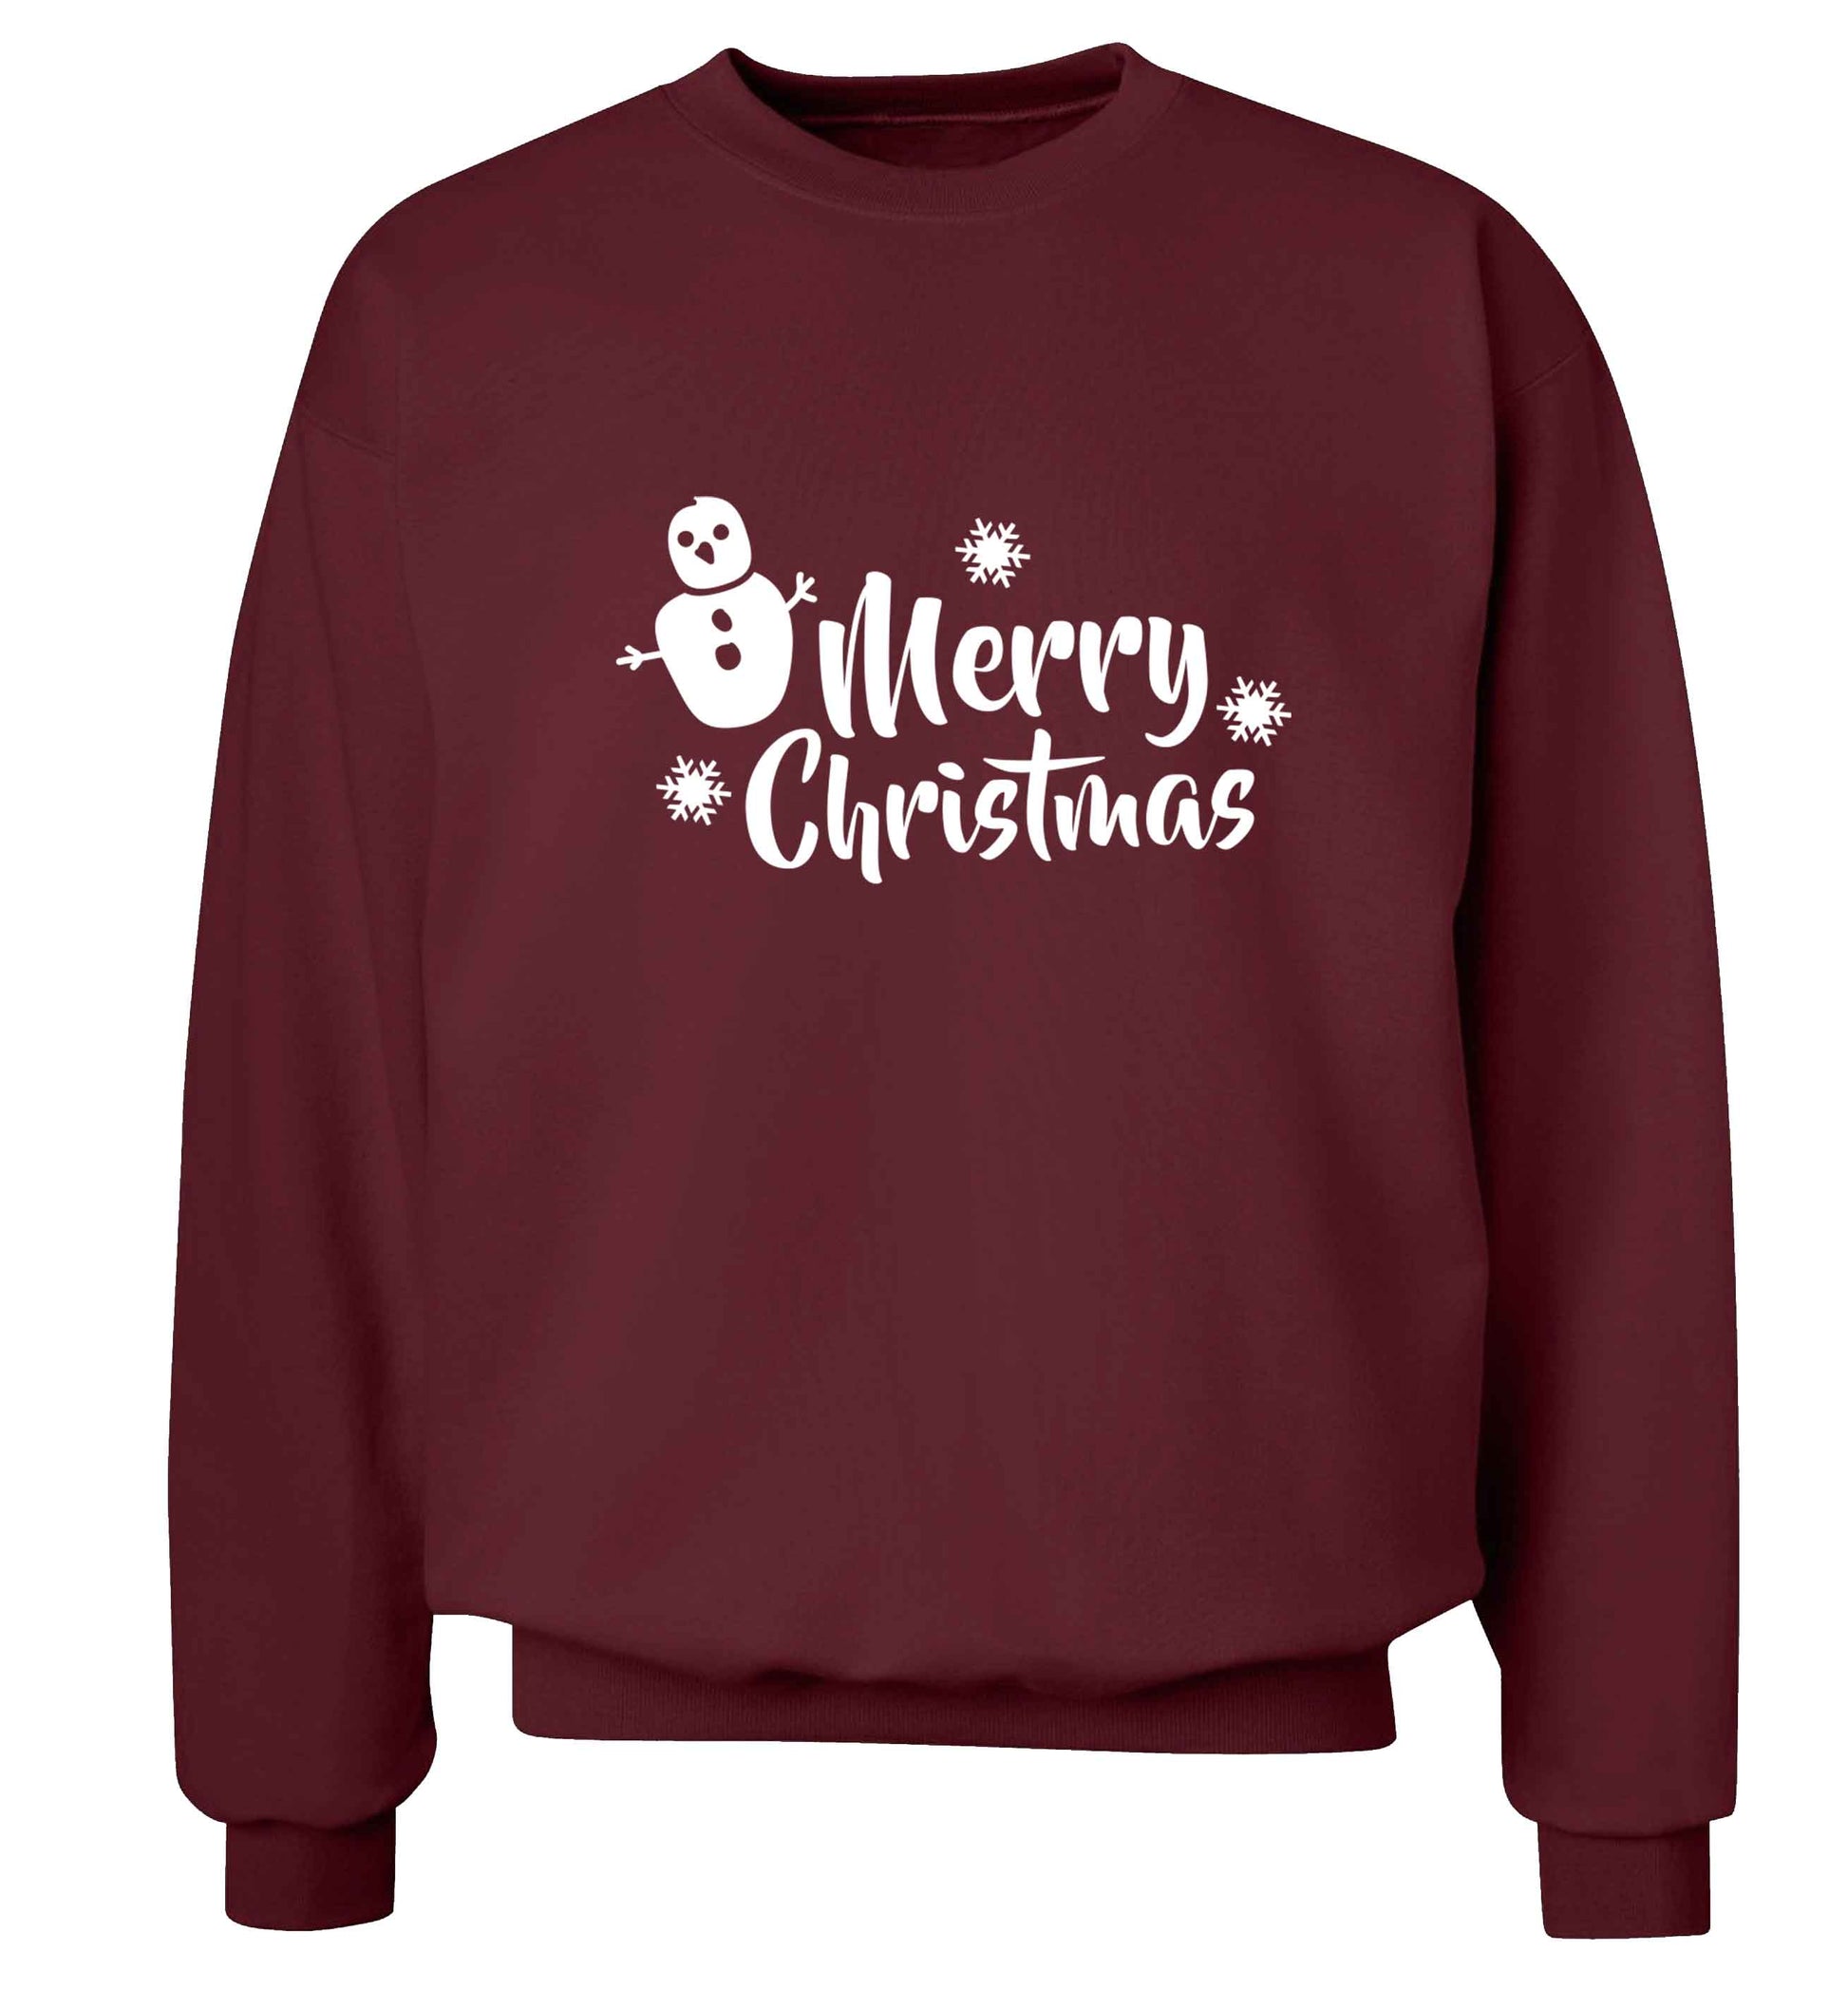 Merry Christmas - snowman adult's unisex maroon sweater 2XL